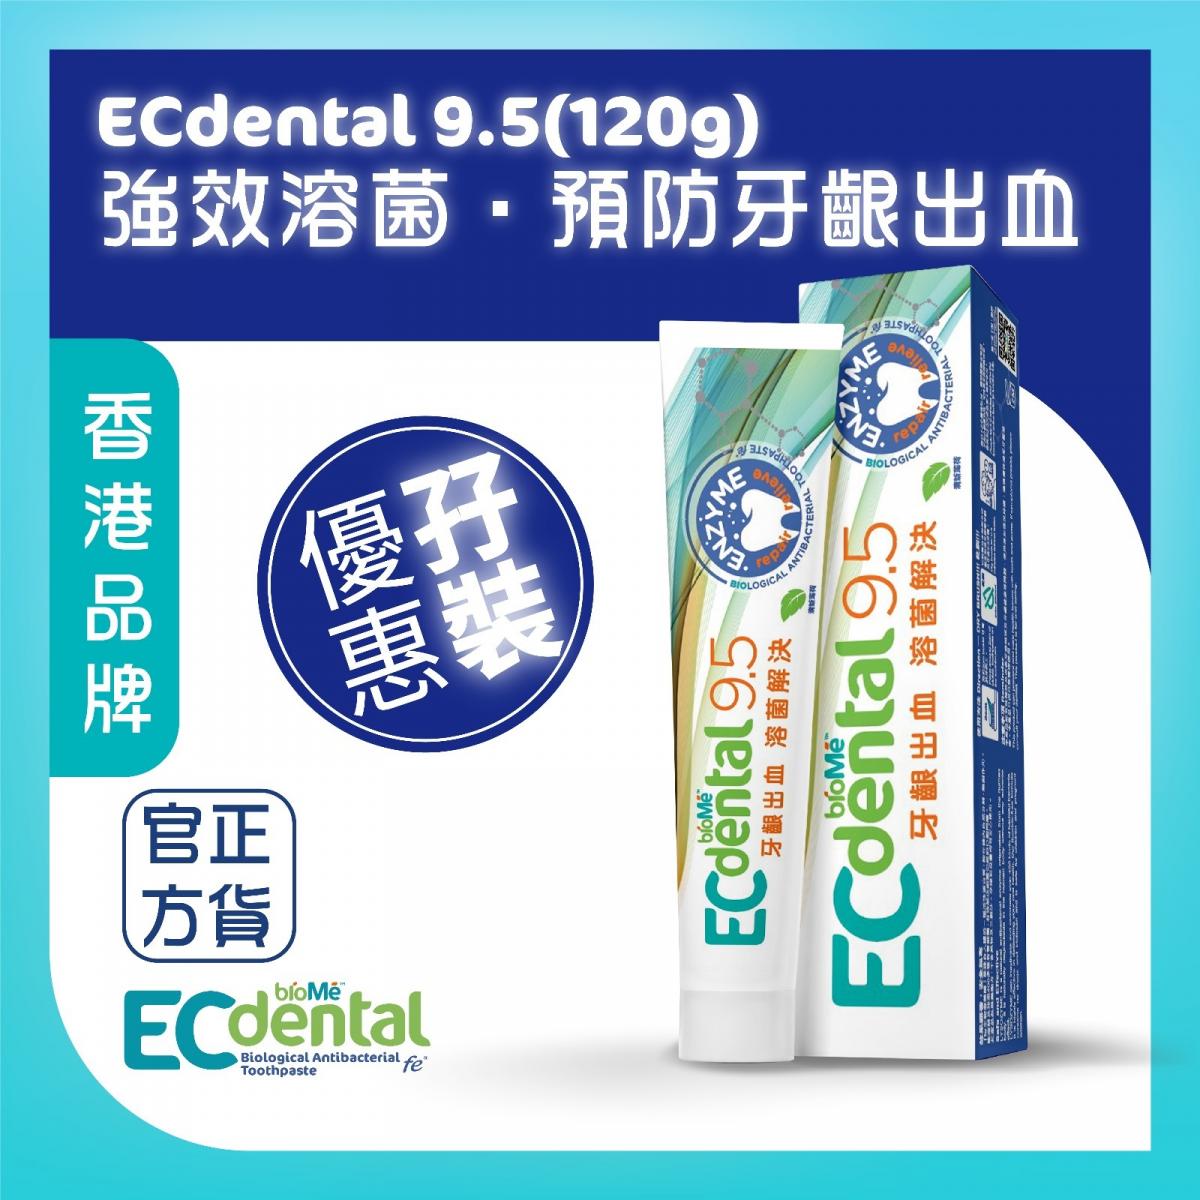 ECdental Biological Antibacterial Toothpaste 9.5 (120g) twins pack